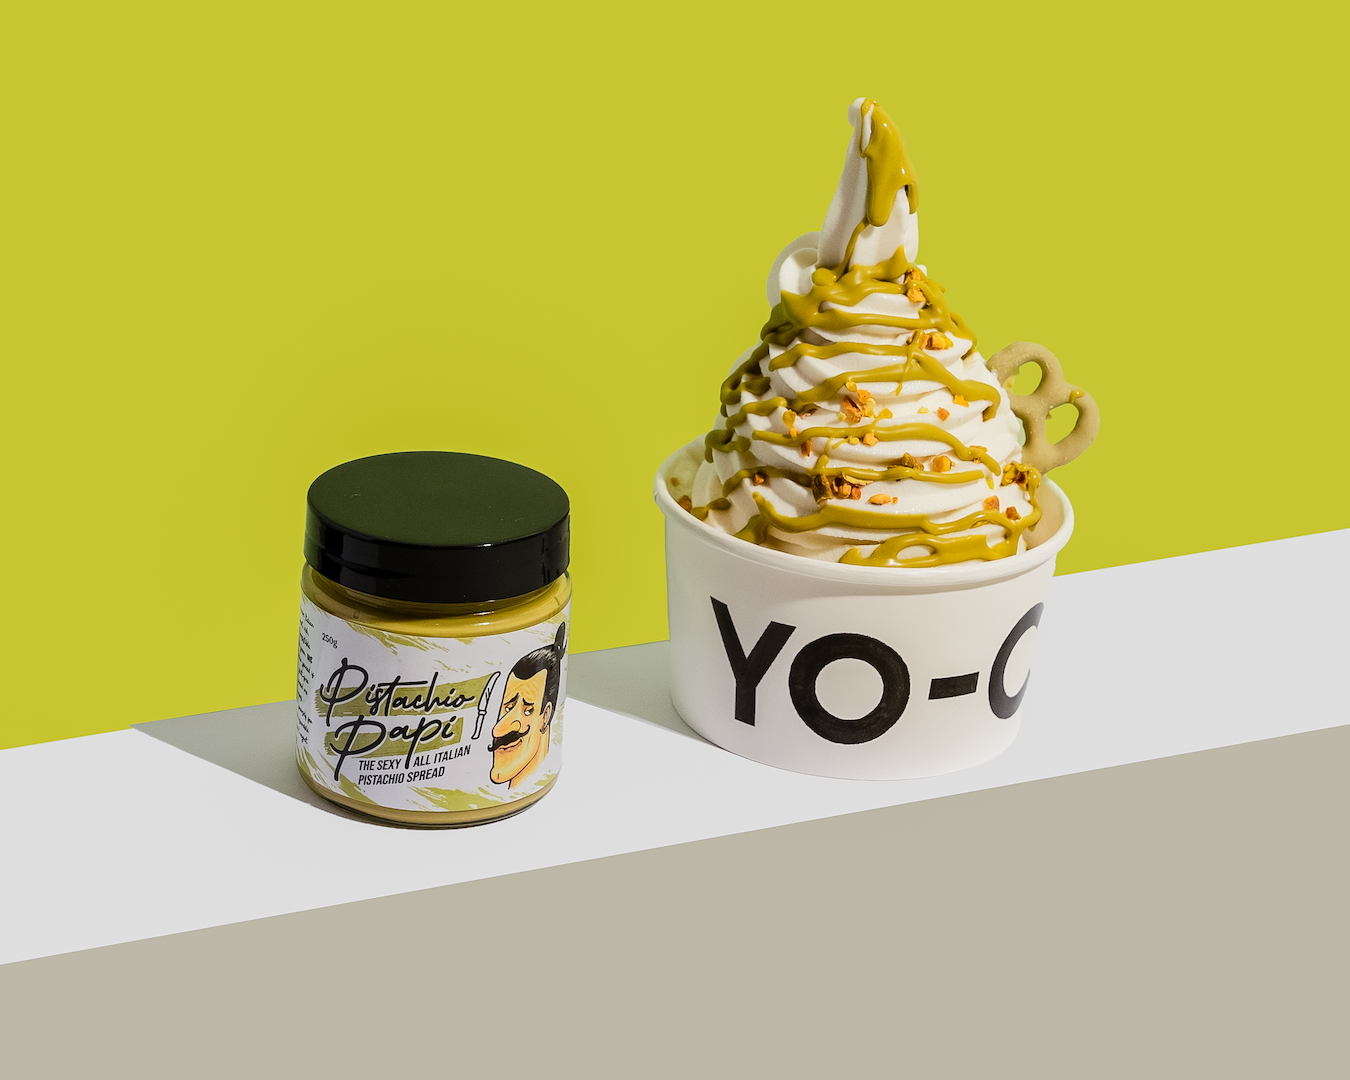 Yo-Chi topped with Pistachio Papi spread